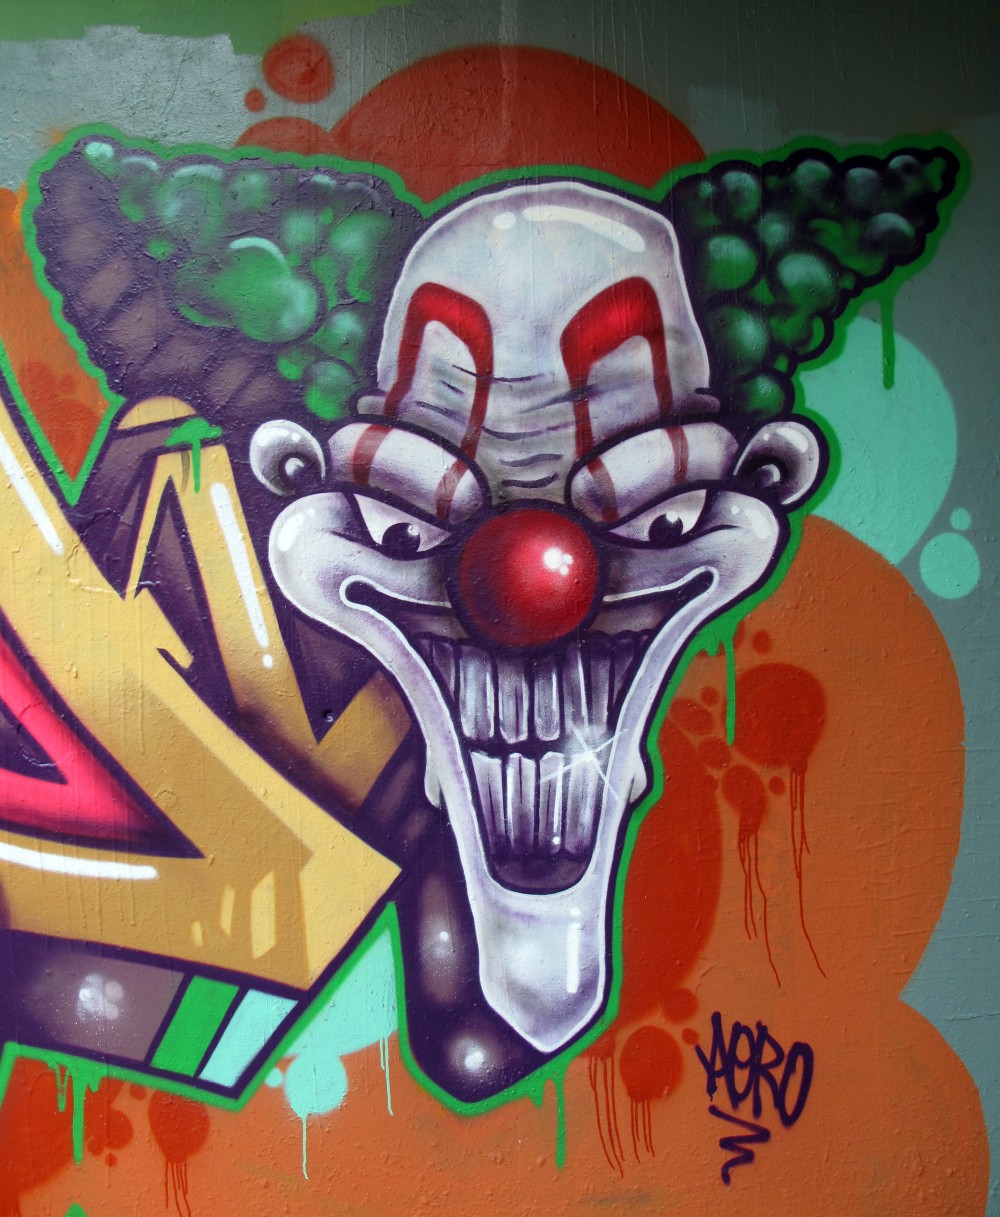 Clowning around down leake street waterloo London graffiti mural